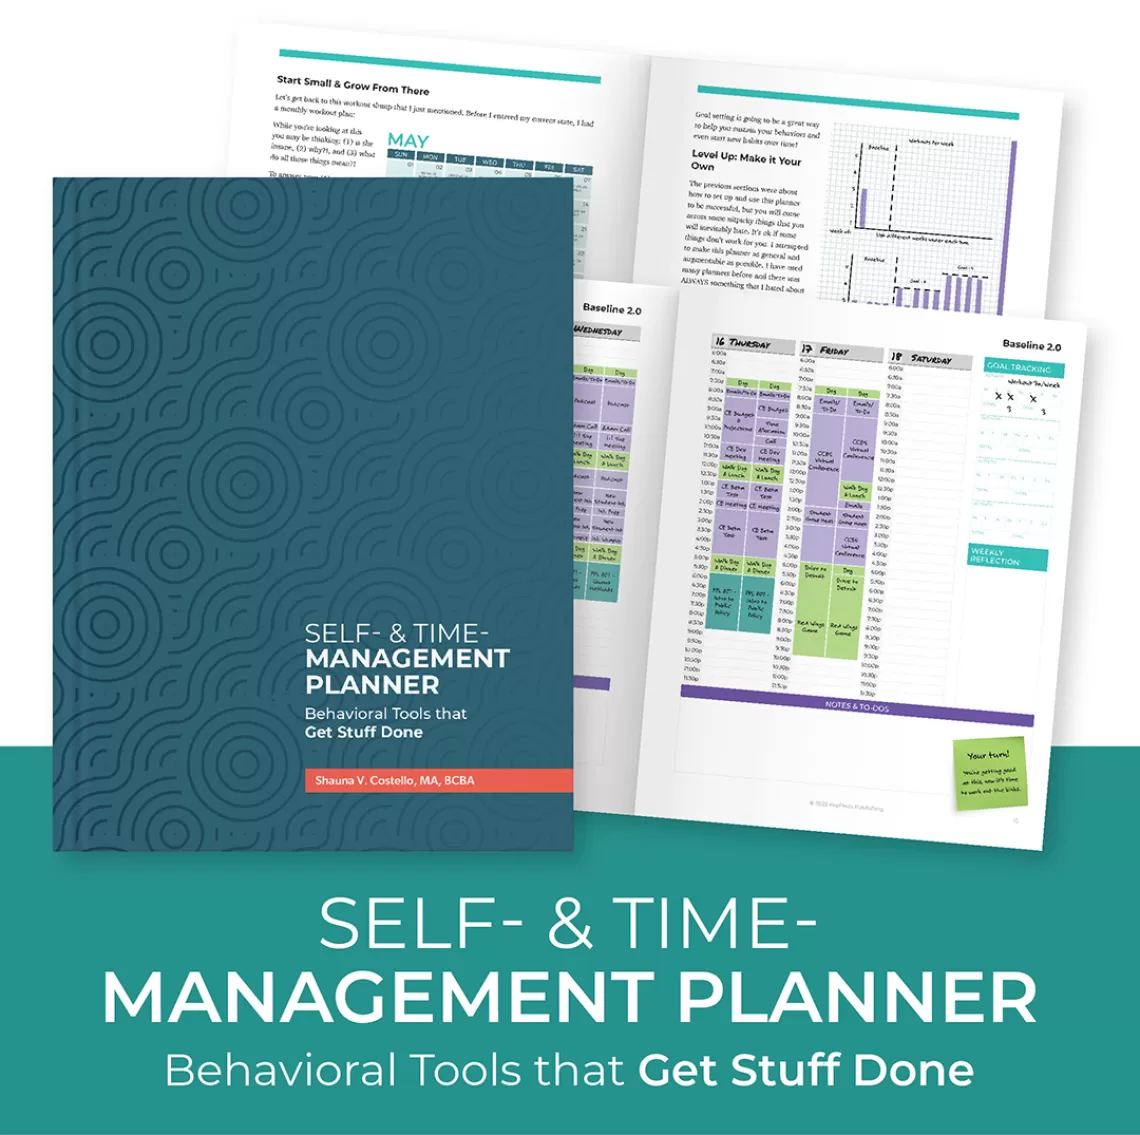 Self- & Time-Management Planner